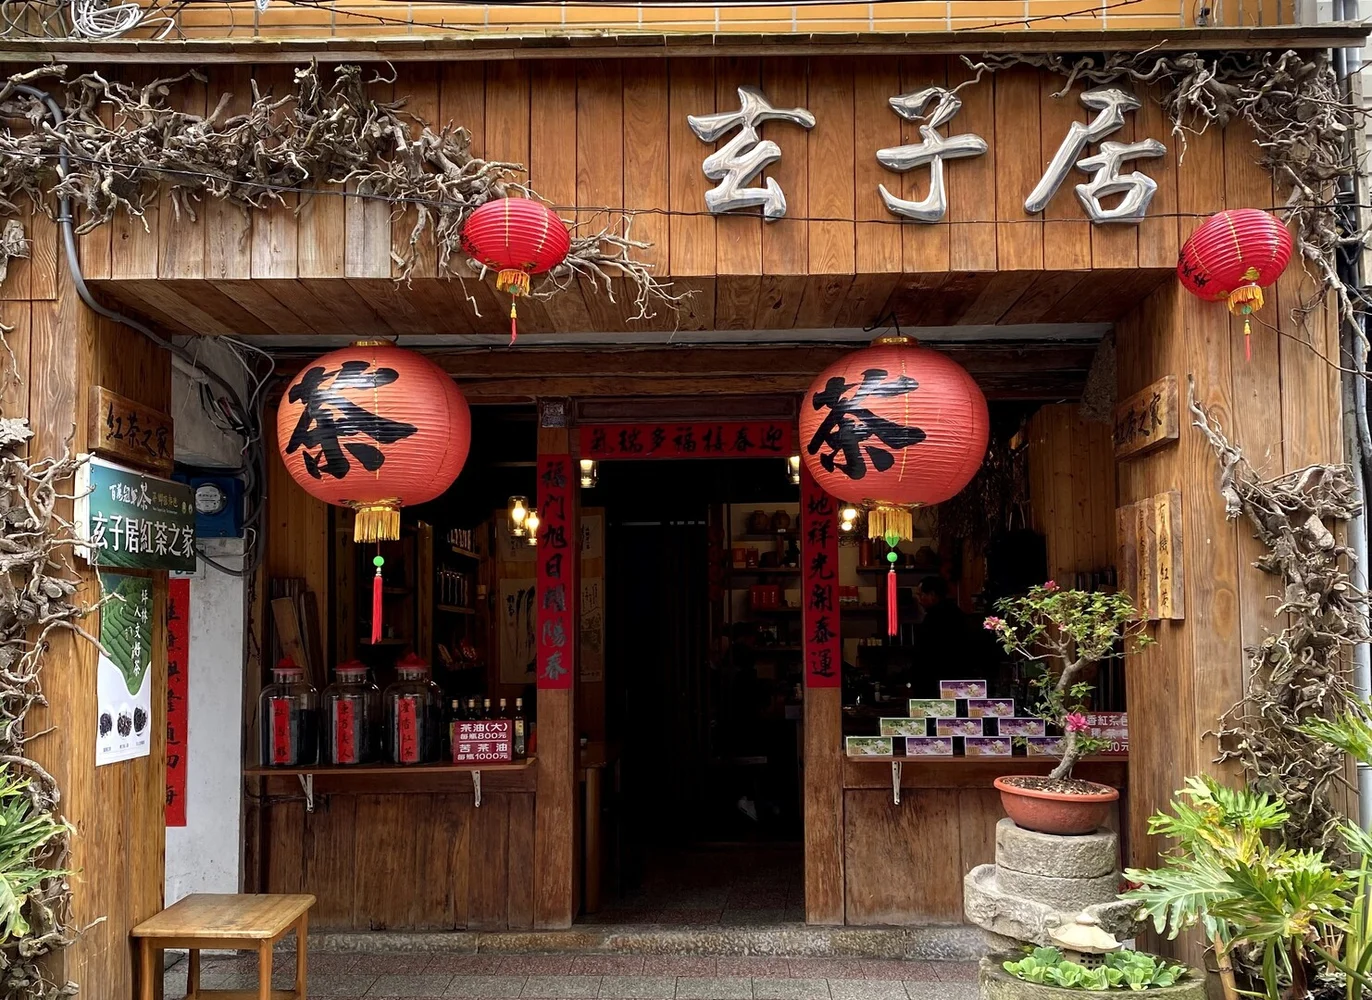 Taiwan Thousand-Island Lake, Pinglin Tea Museum, & Bagua Tea Garden Tour From Taipei